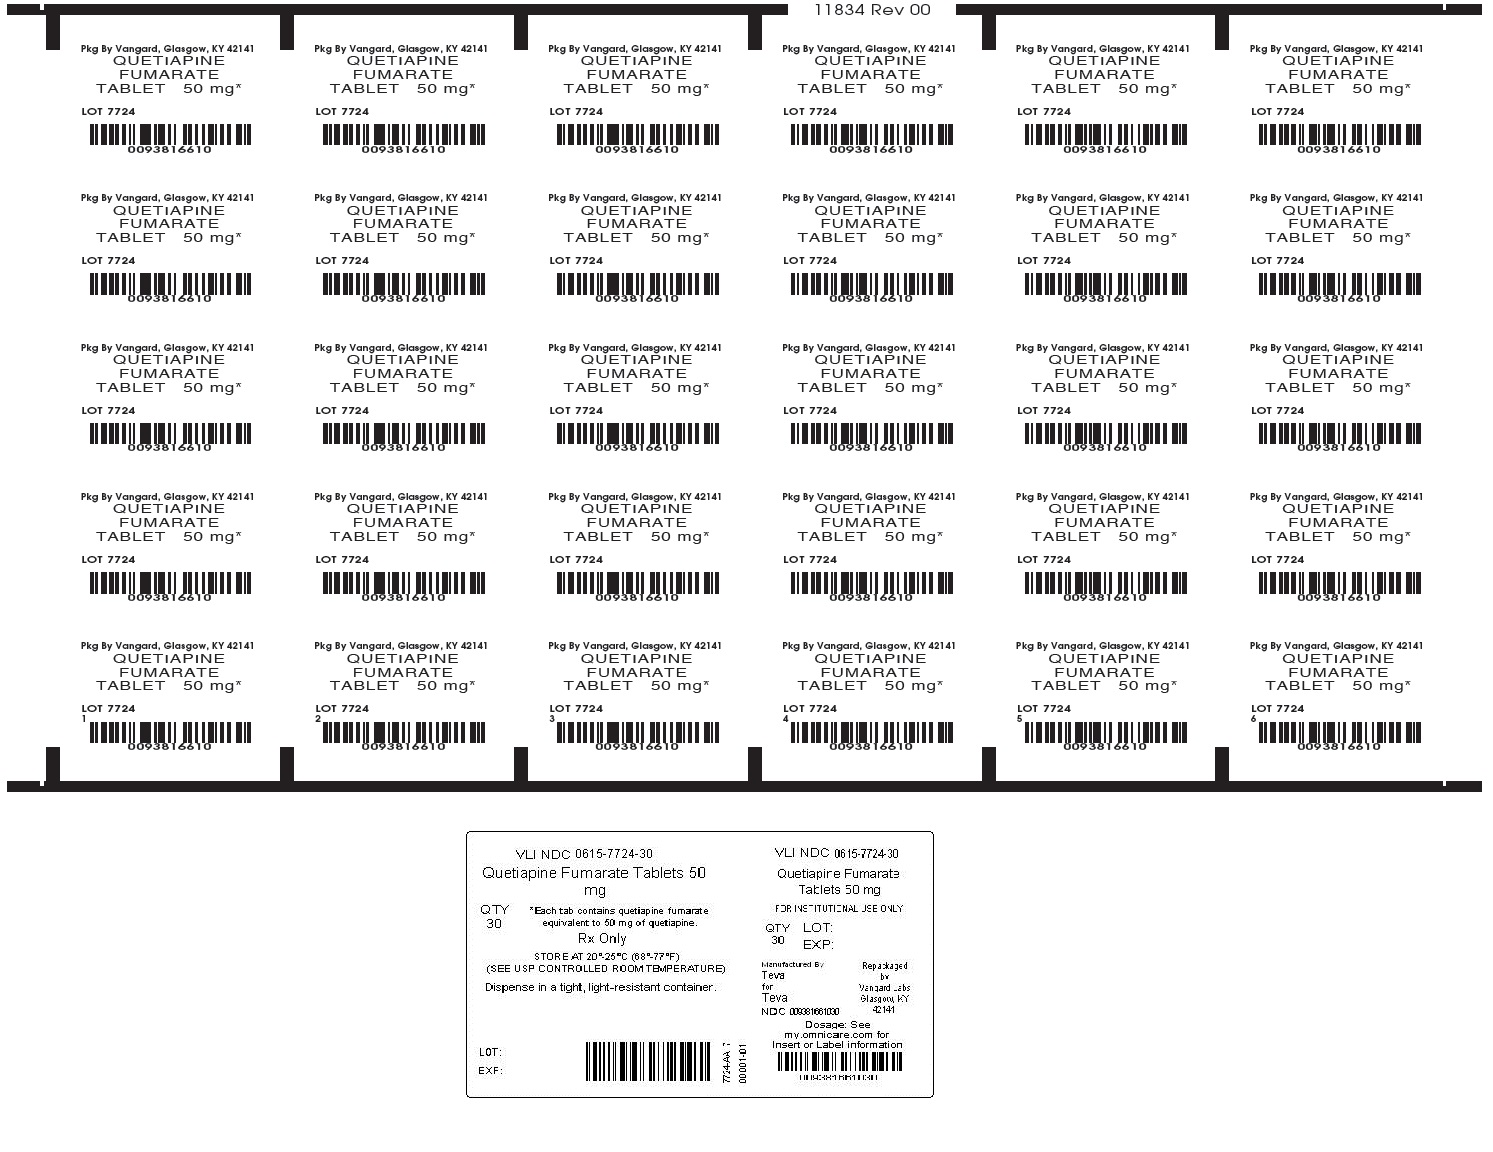 Quetiapine Fumarate Tabs 50mg unit dose label